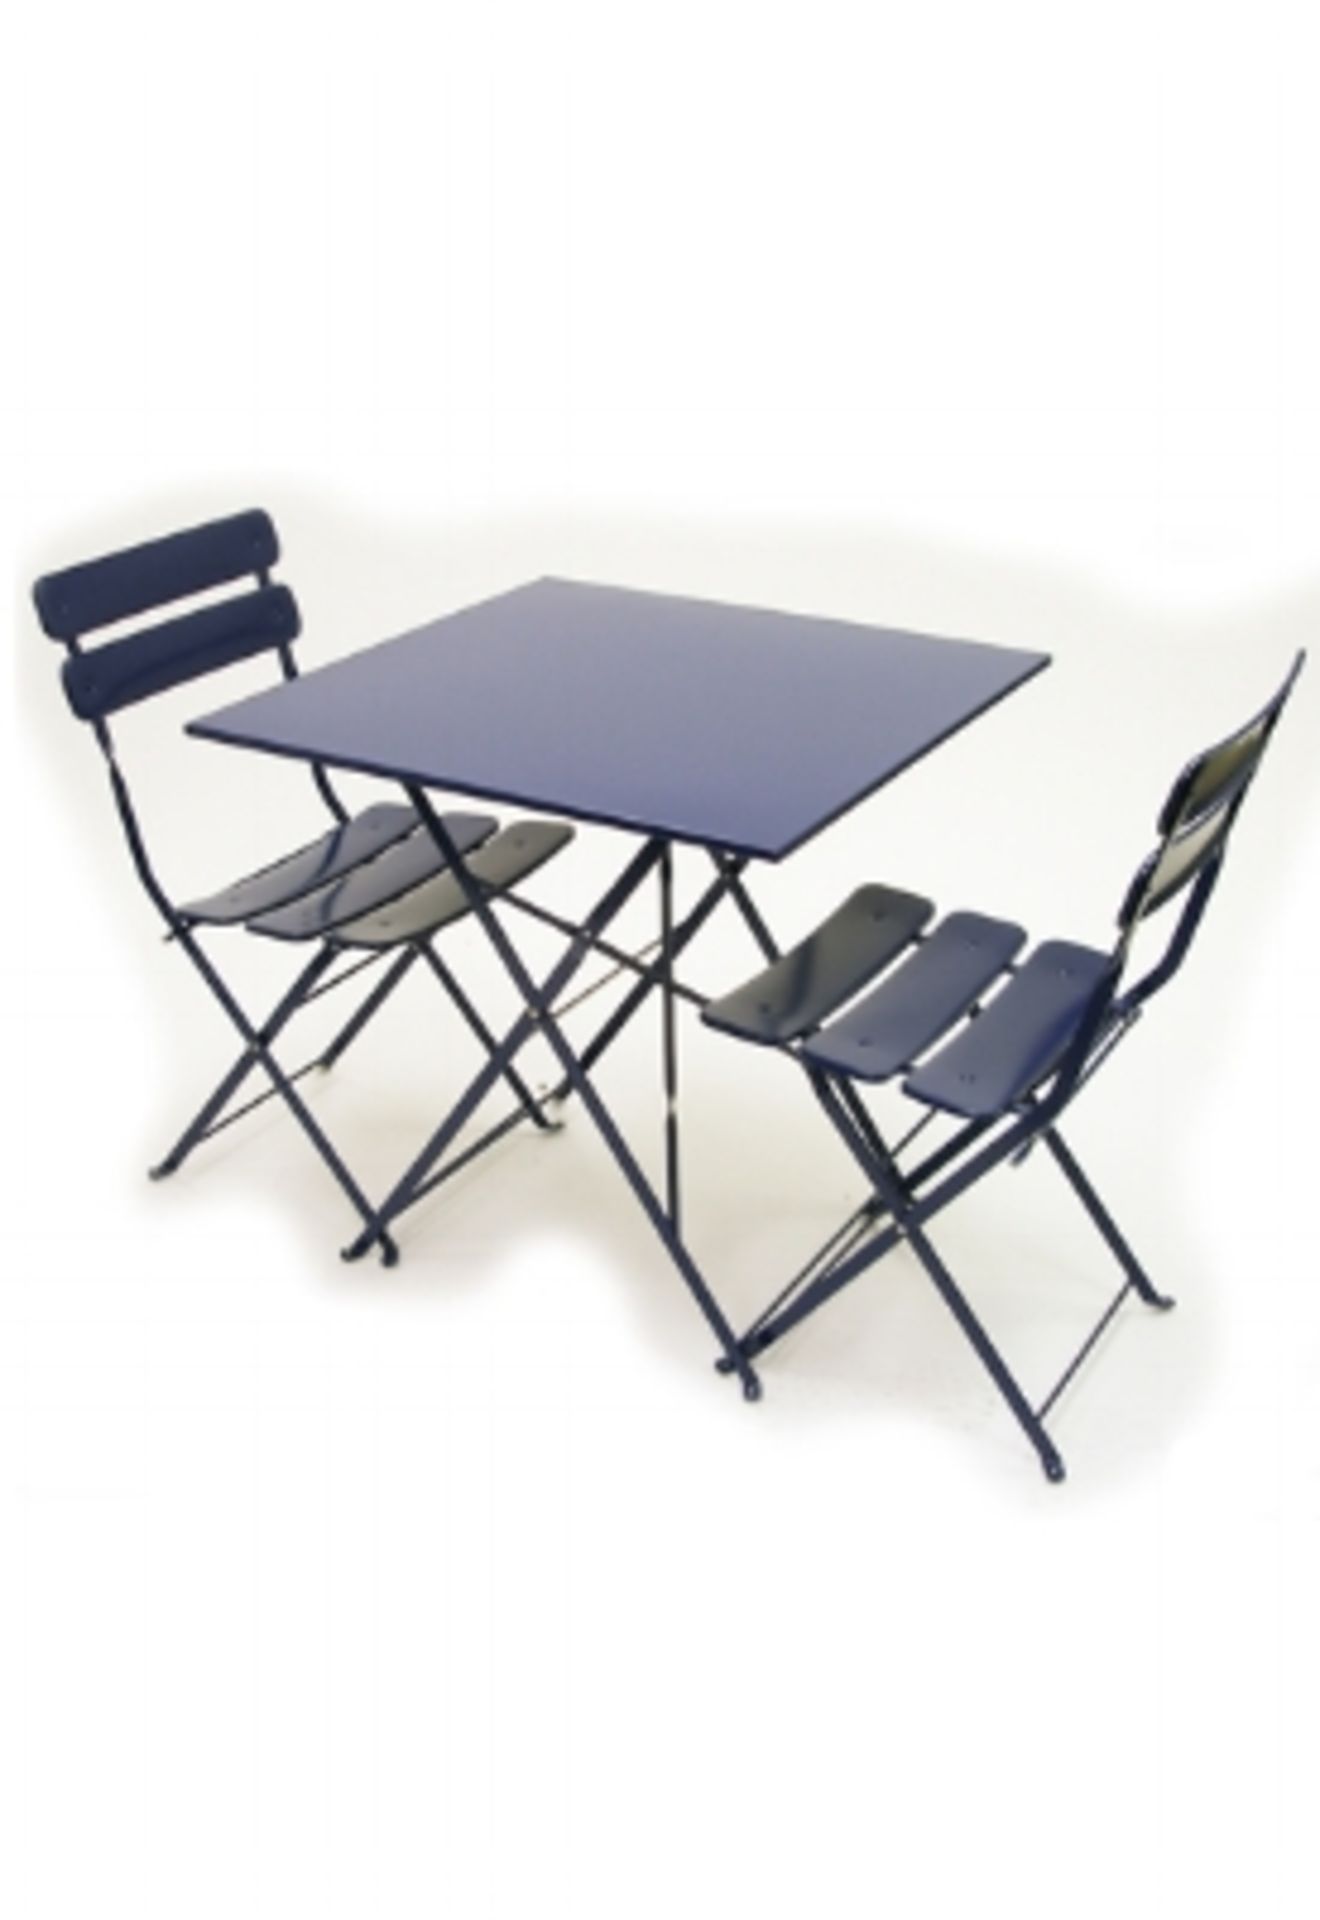 Jardin Rectangle Folding Table - Blue. ElectroZinc treated steel, powder coated. Qty 16 tables.